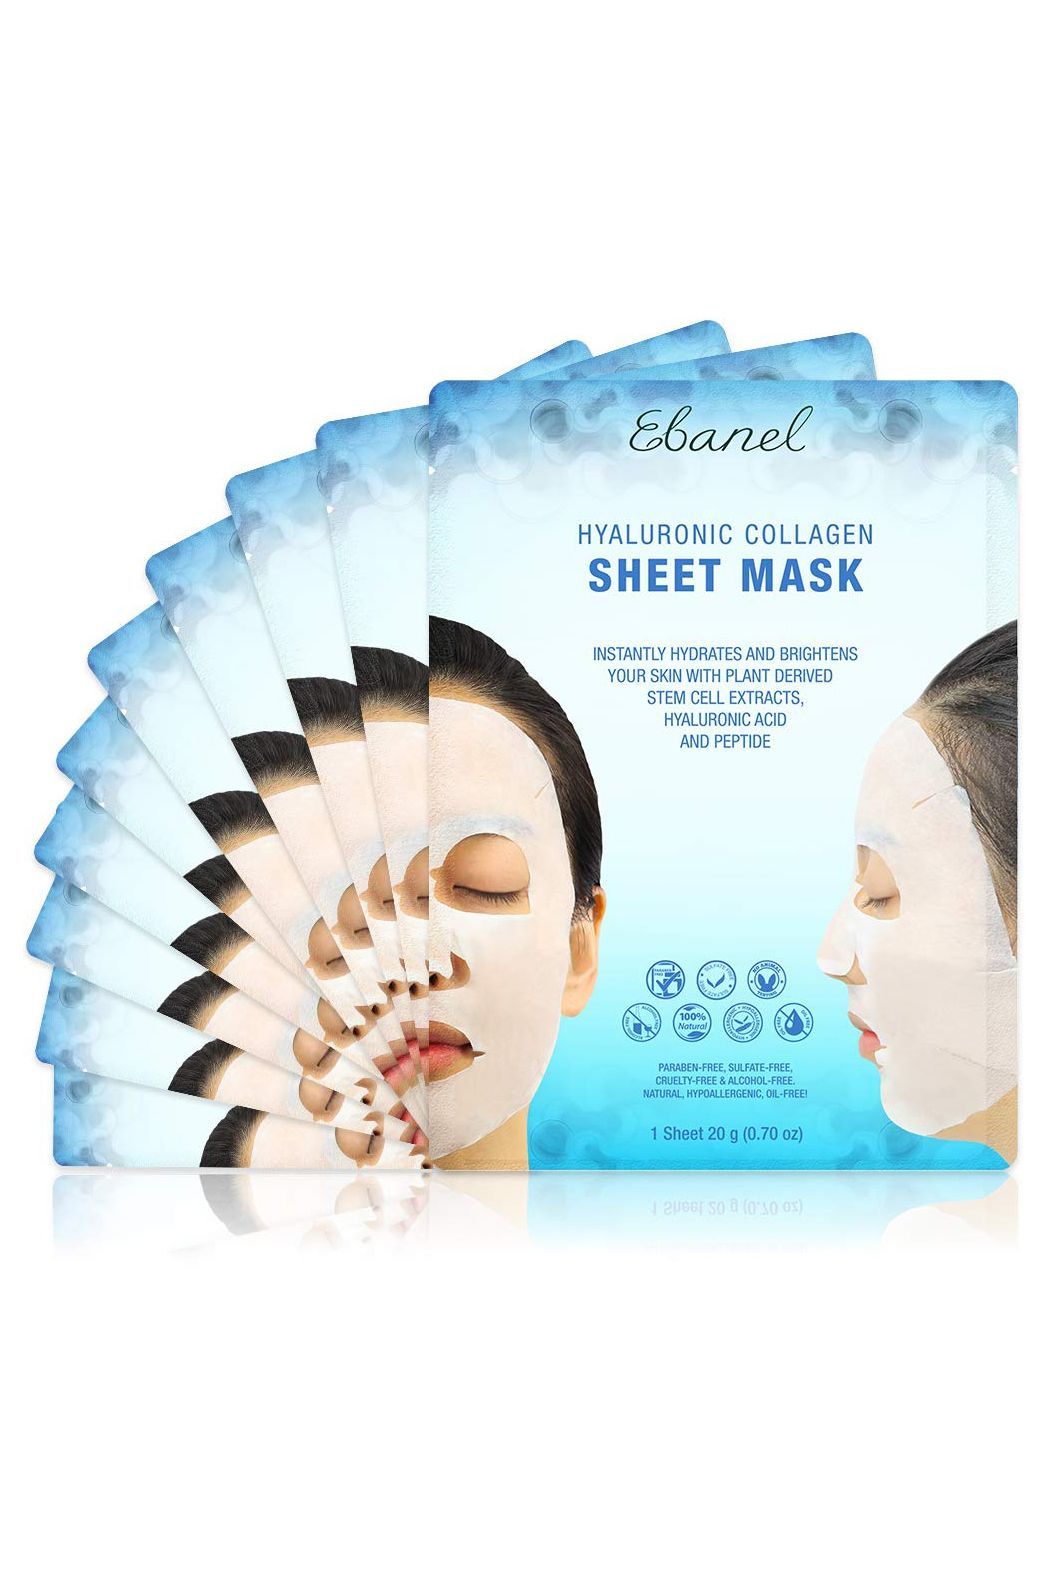 where to buy facial mask sheets